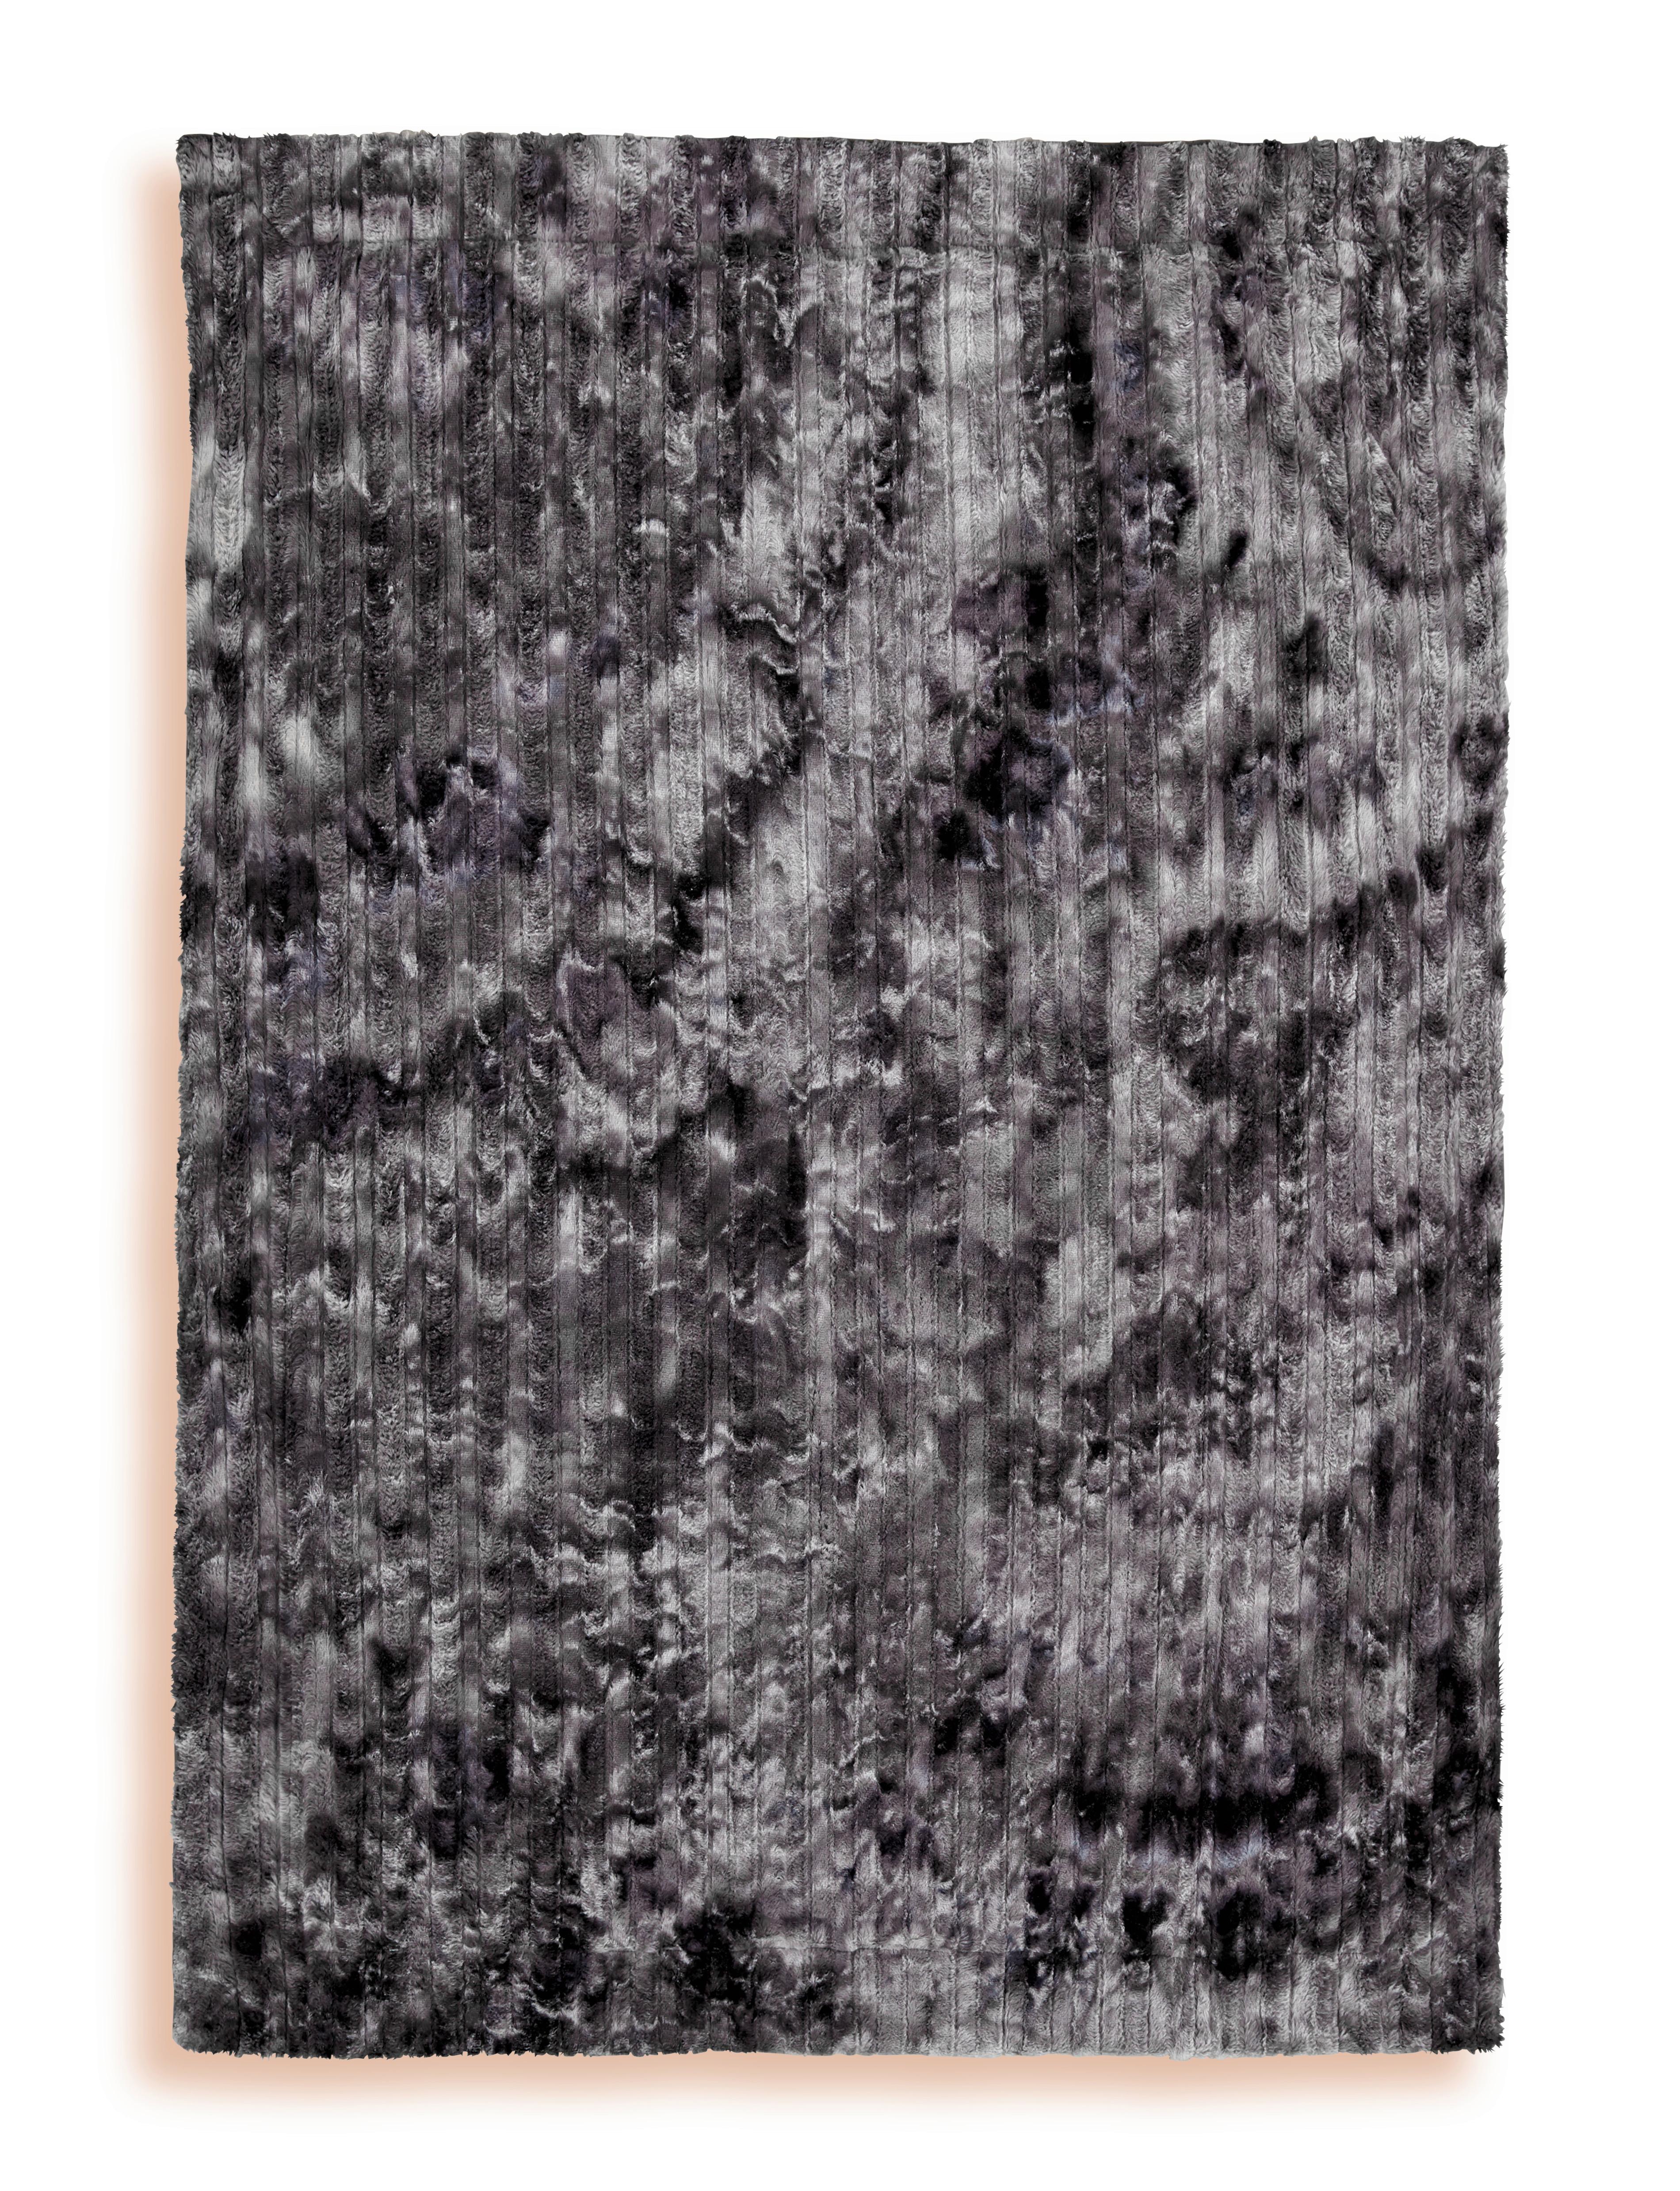 Kuscheldecke Linessa Grau 150x200 cm Felloptik - Grau, KONVENTIONELL, Textil (150/200cm) - Ondega